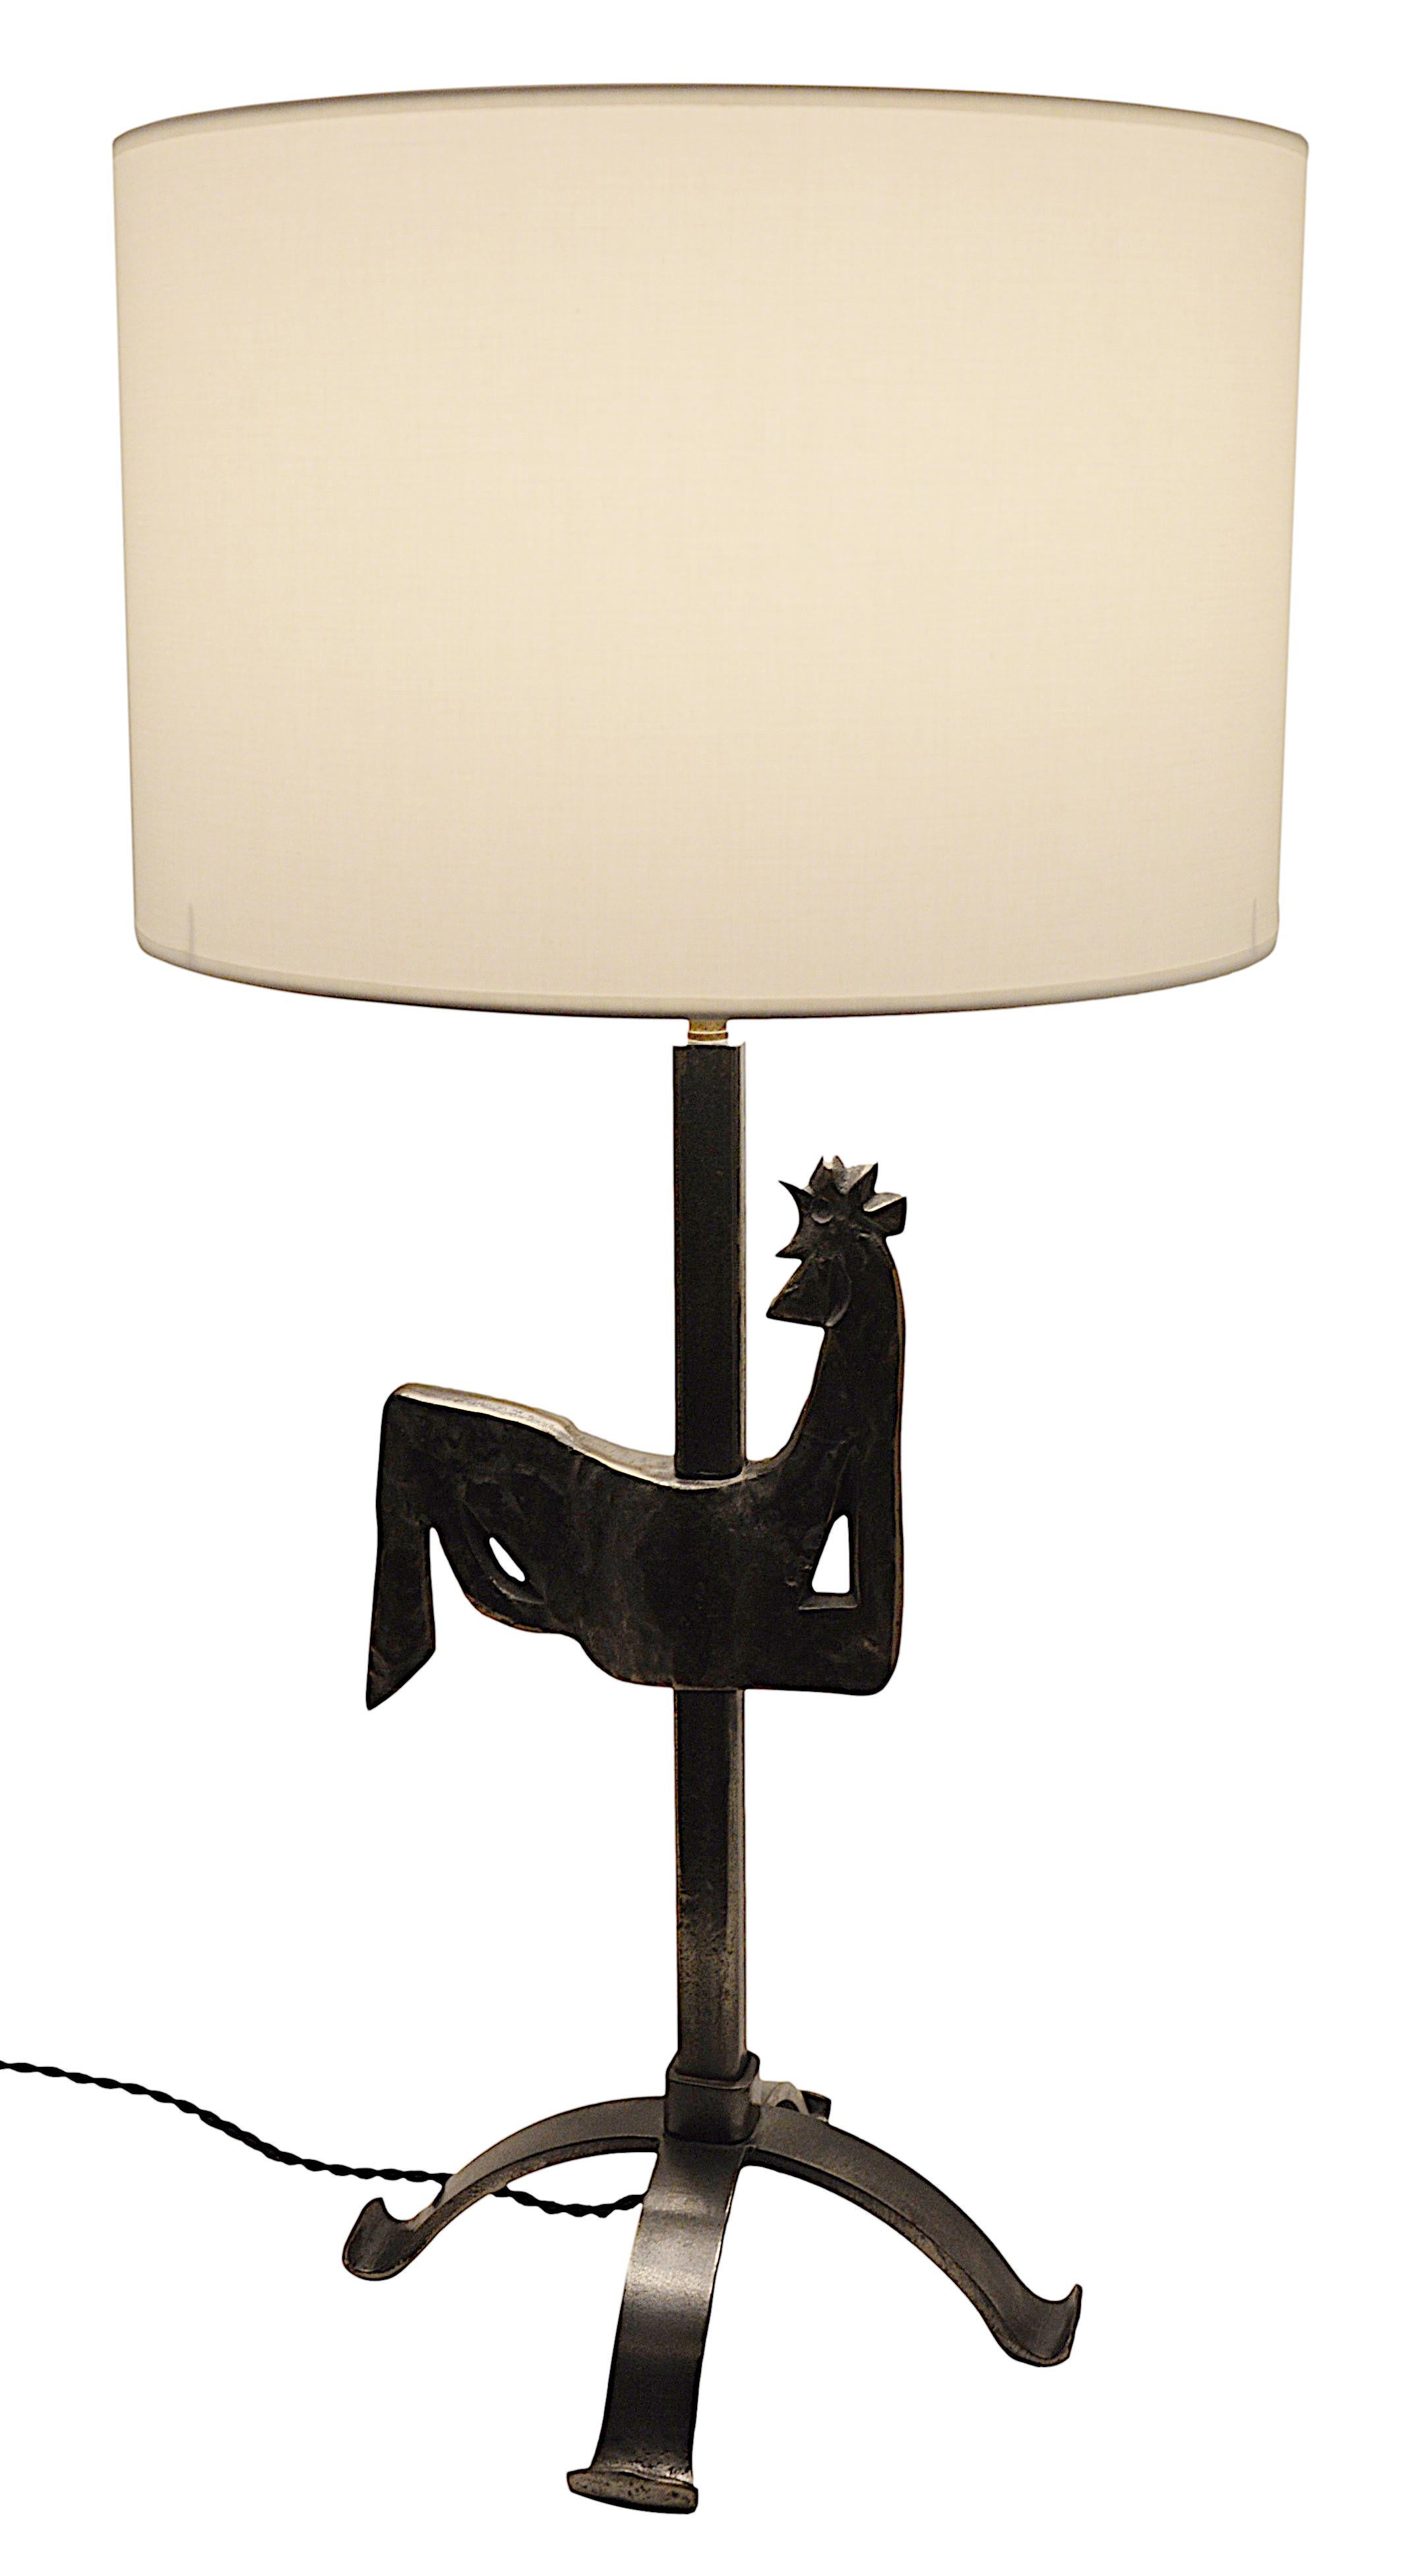 French Midcentury Table Lamp, Ateliers de Marolles, Jean Touret, ca.1950, Possible Pair For Sale